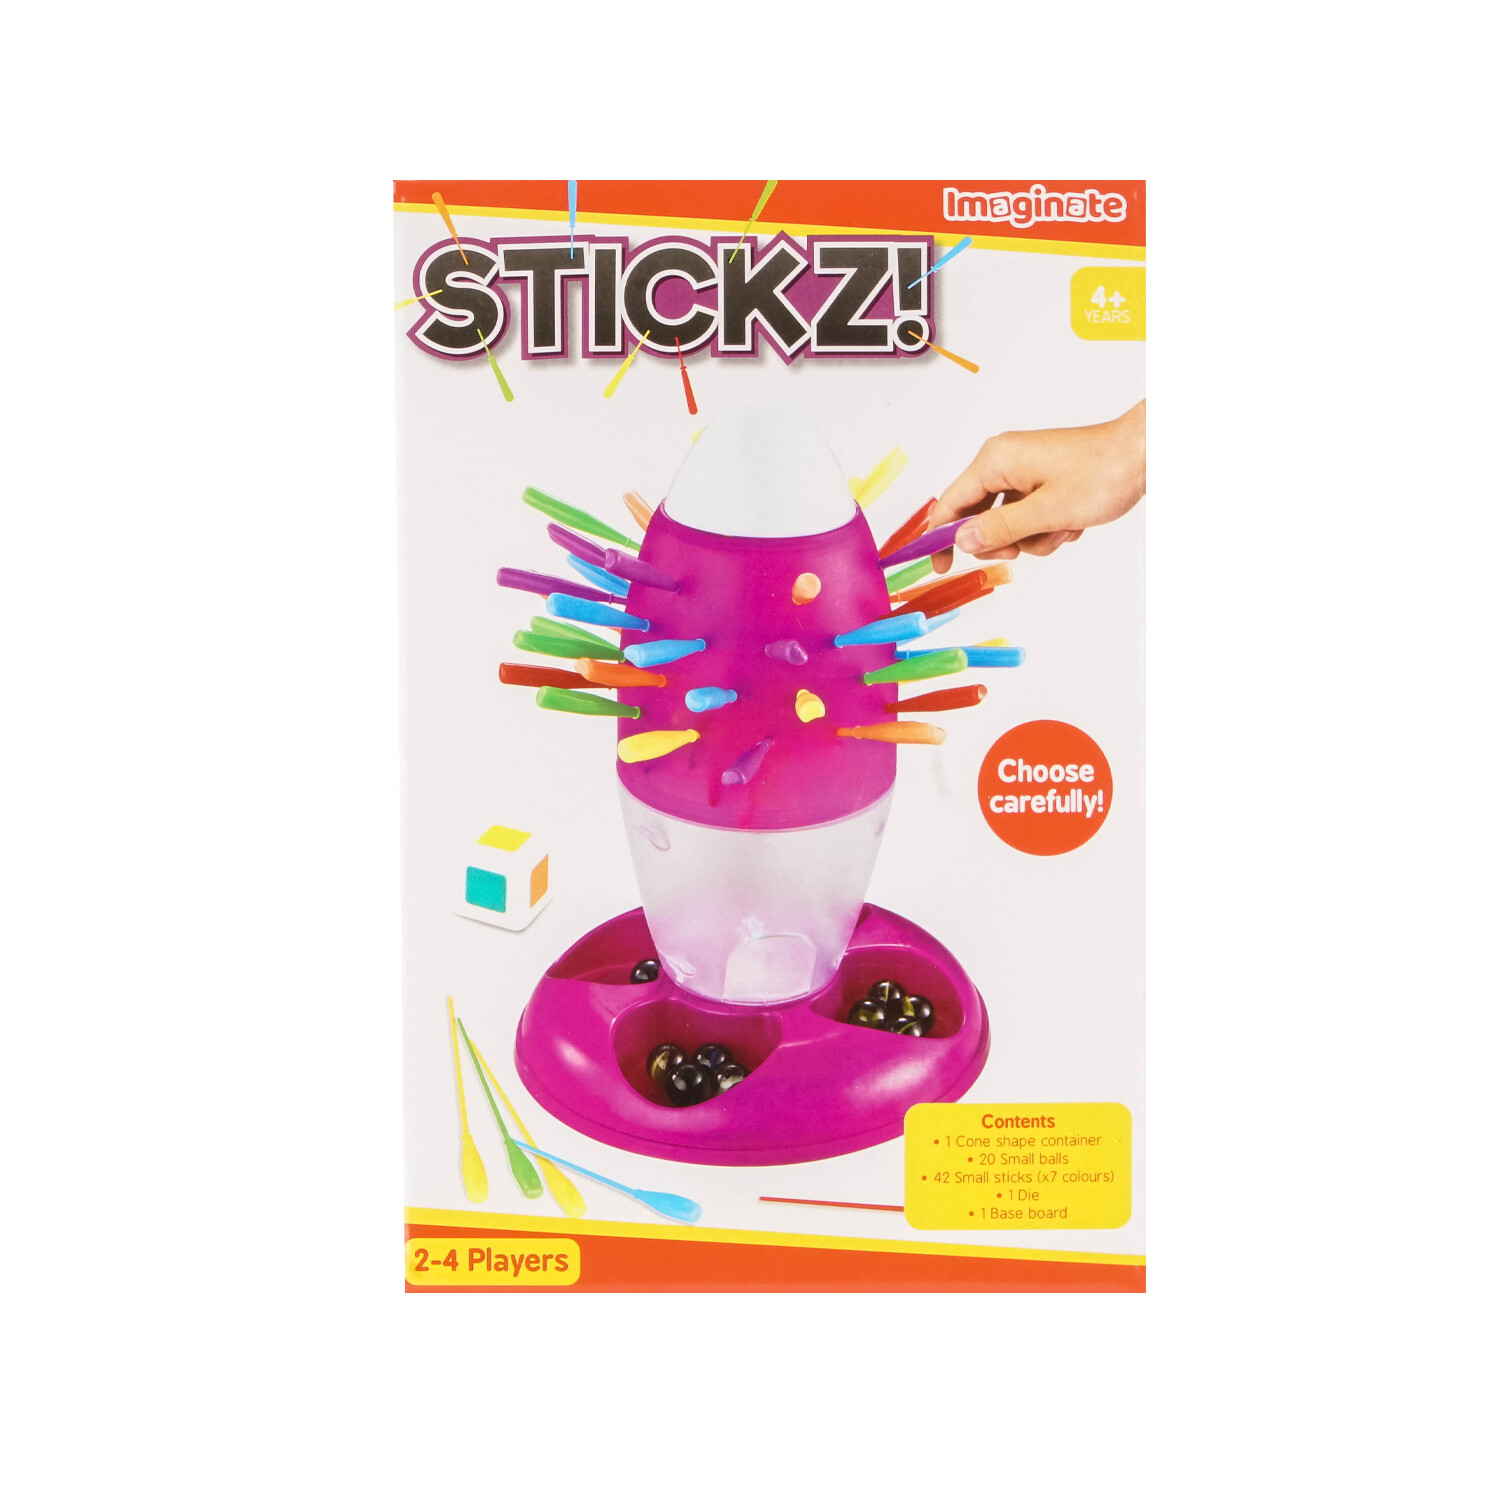 Imaginate Stickz Family Game Image 1